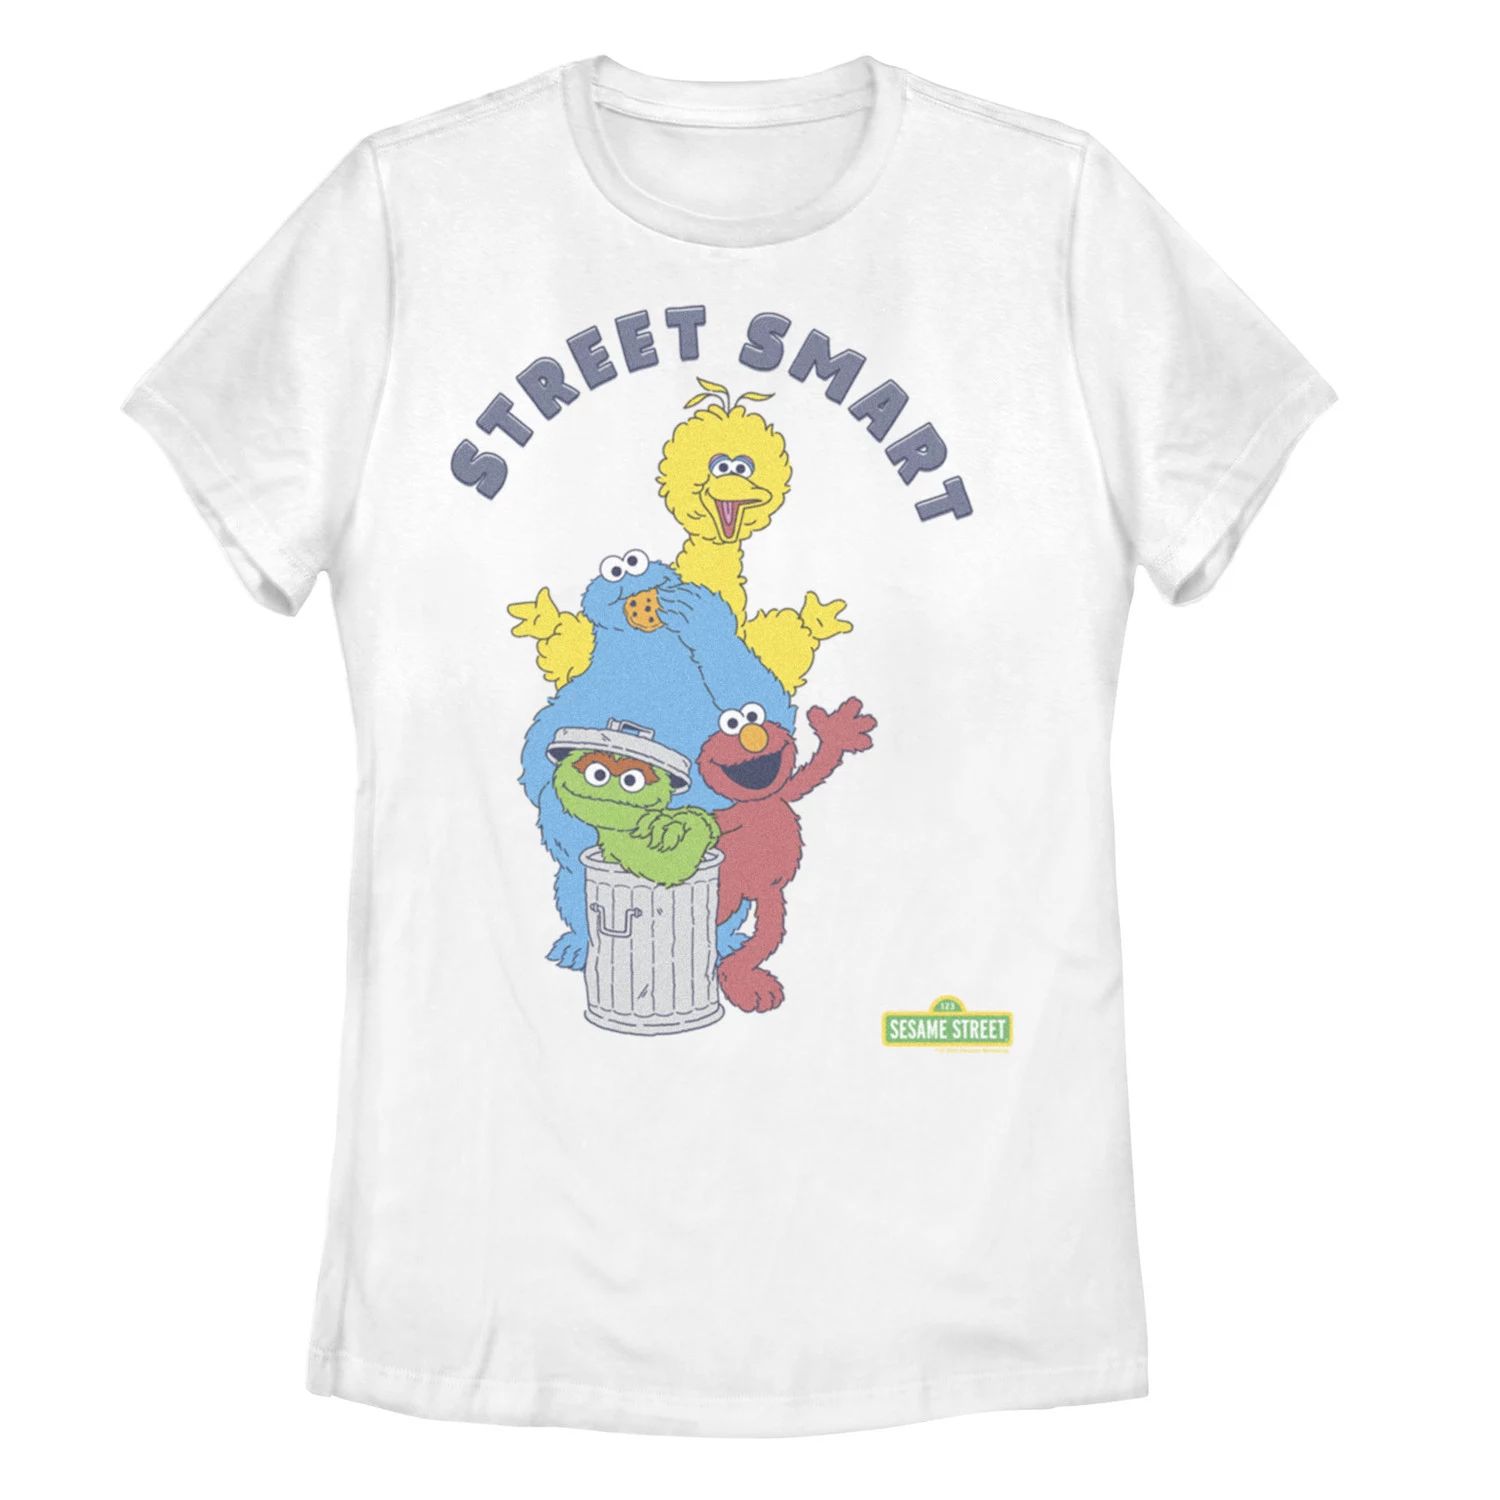 Детская футболка с графическим рисунком «Улица Сезам Улица Улица Сезам» Licensed Character